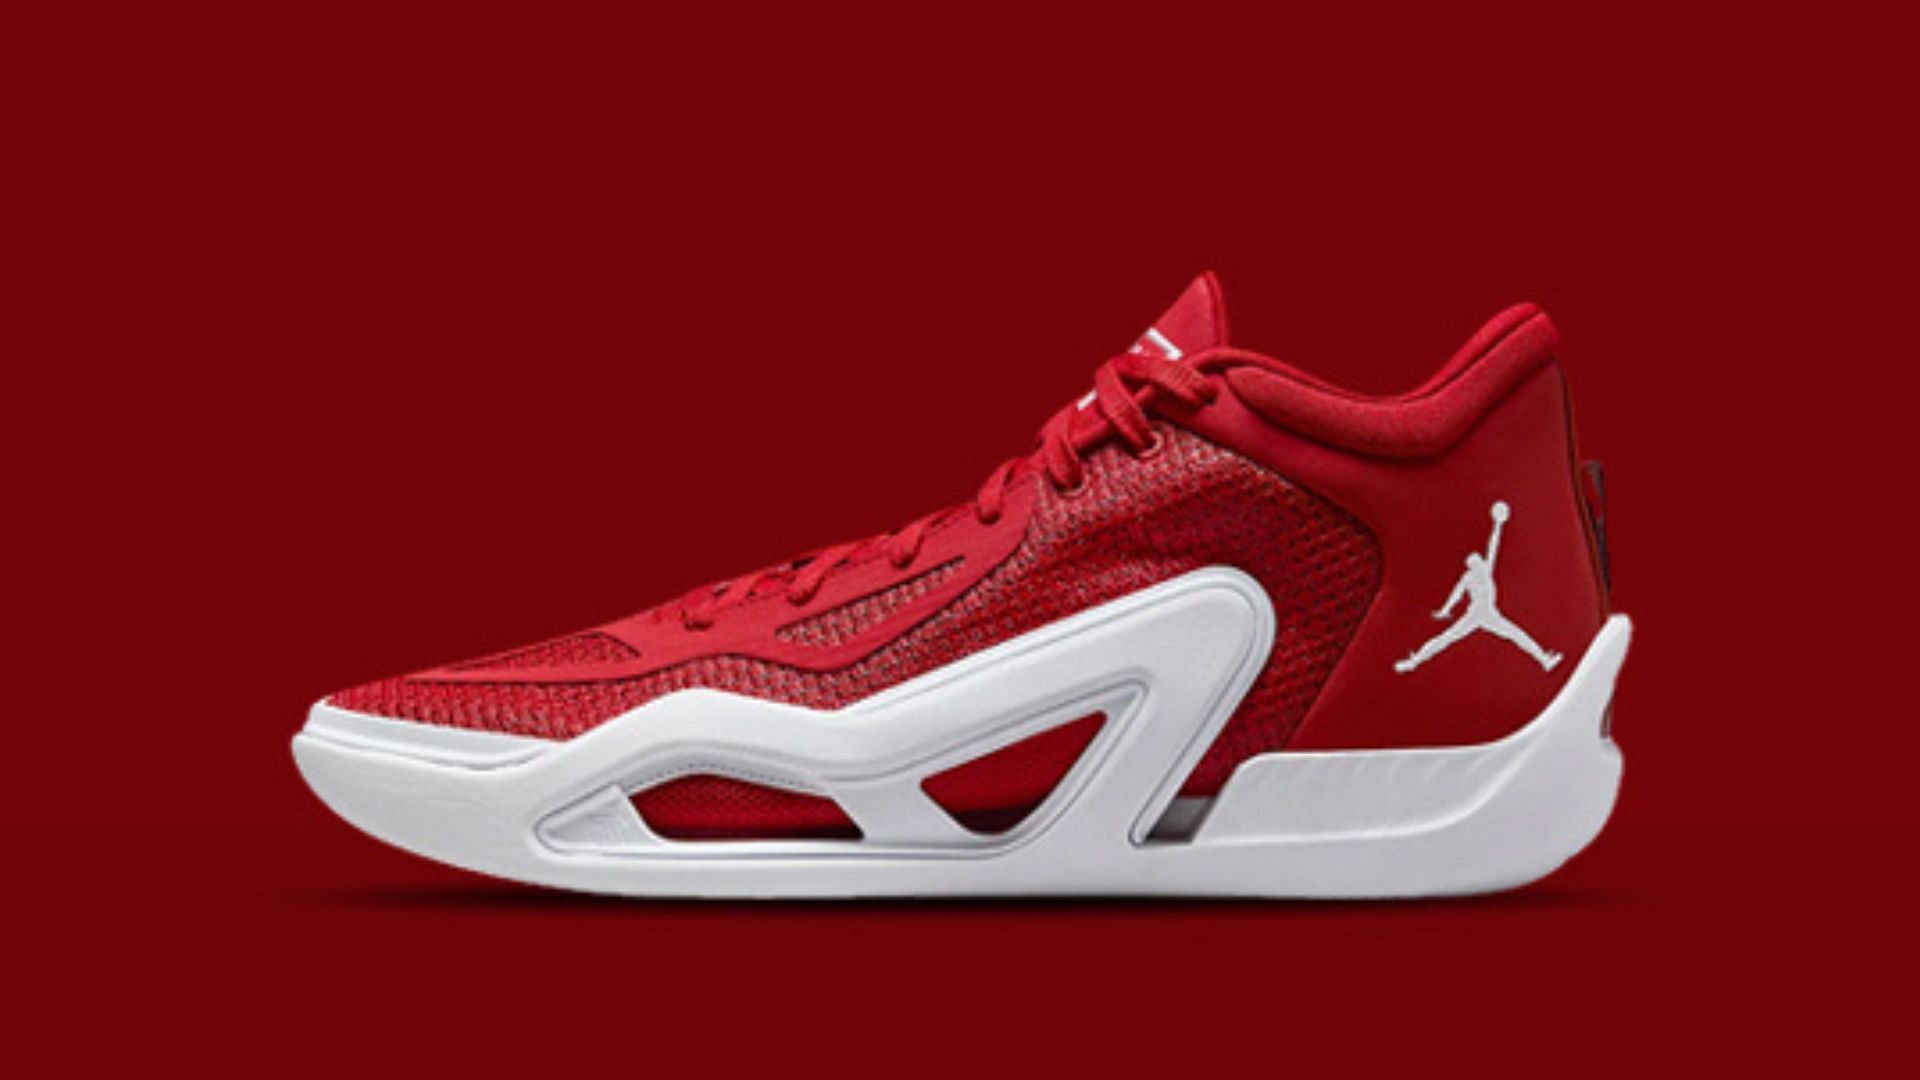 Jayson Tatum: Jordan Tatum 1 “University Red” shoes: Where to get, price,  and more details explored